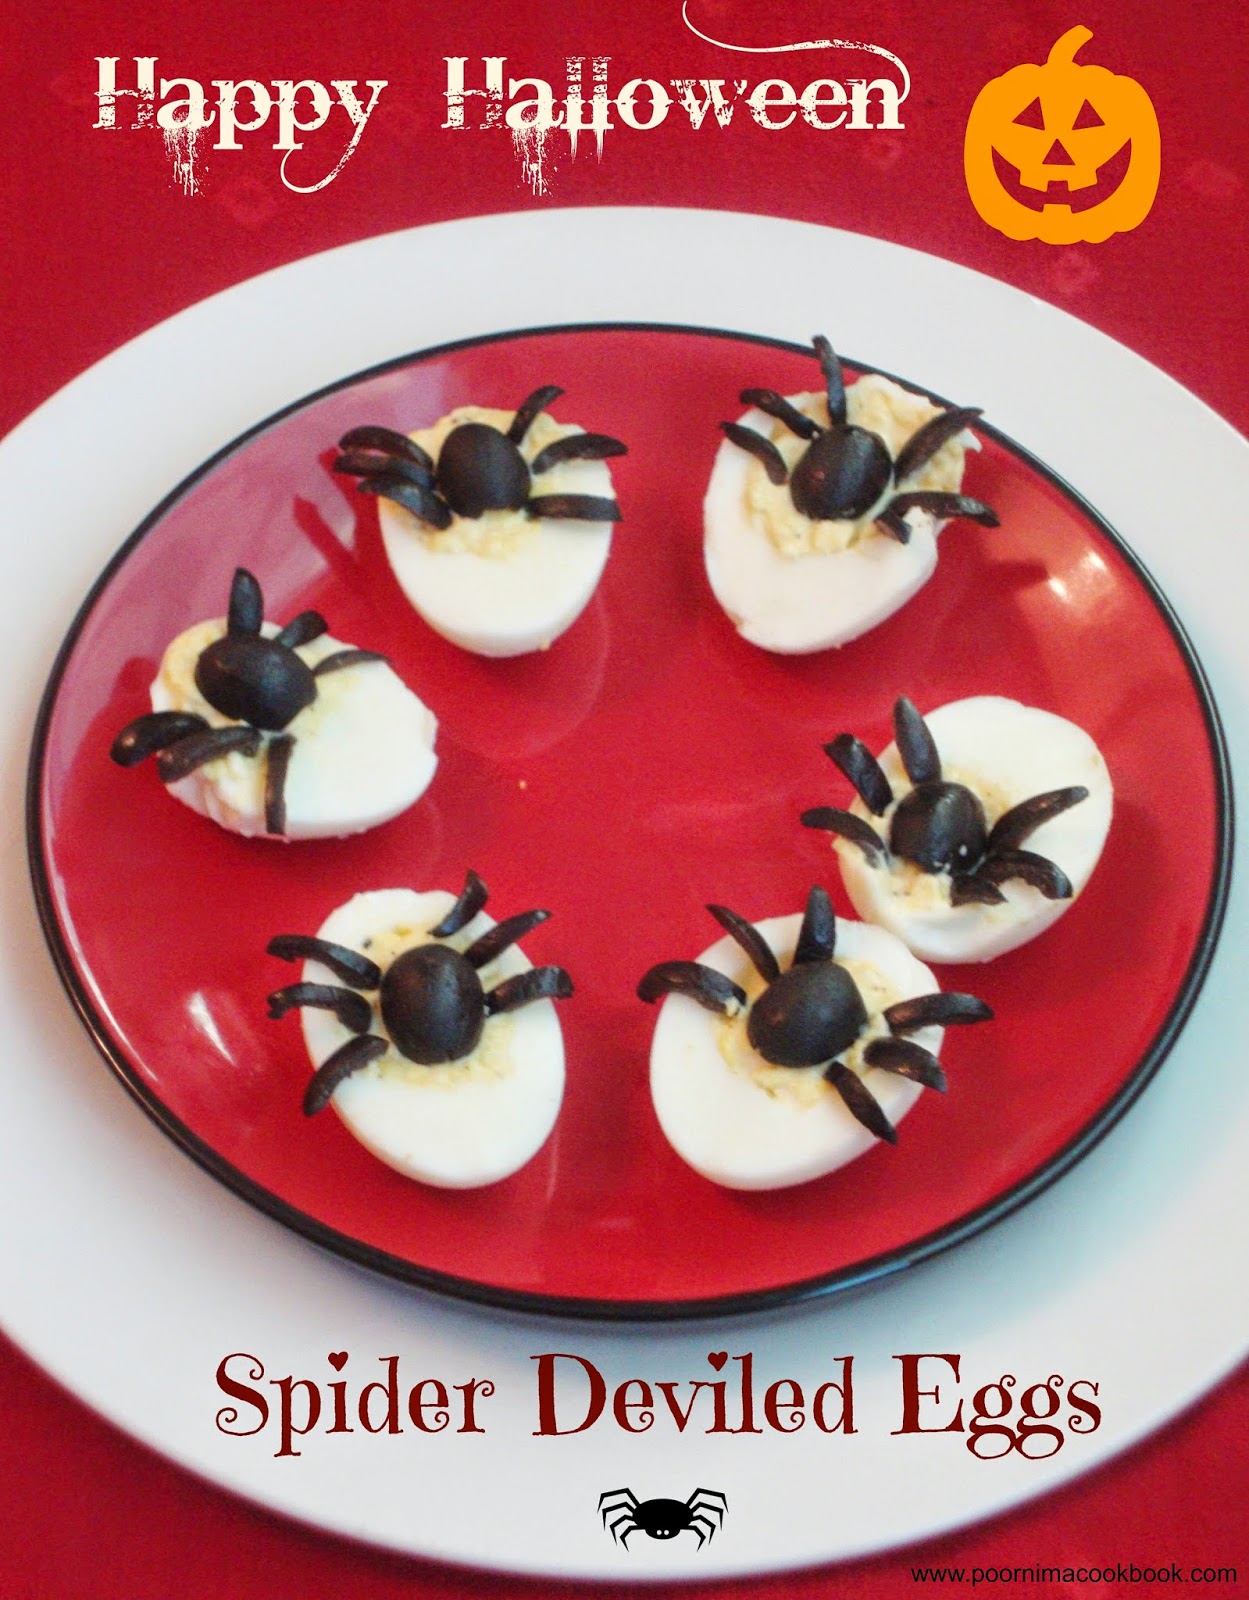 Poornima's Cook Book: Spider Deviled Eggs / Spooky Deviled Eggs ...